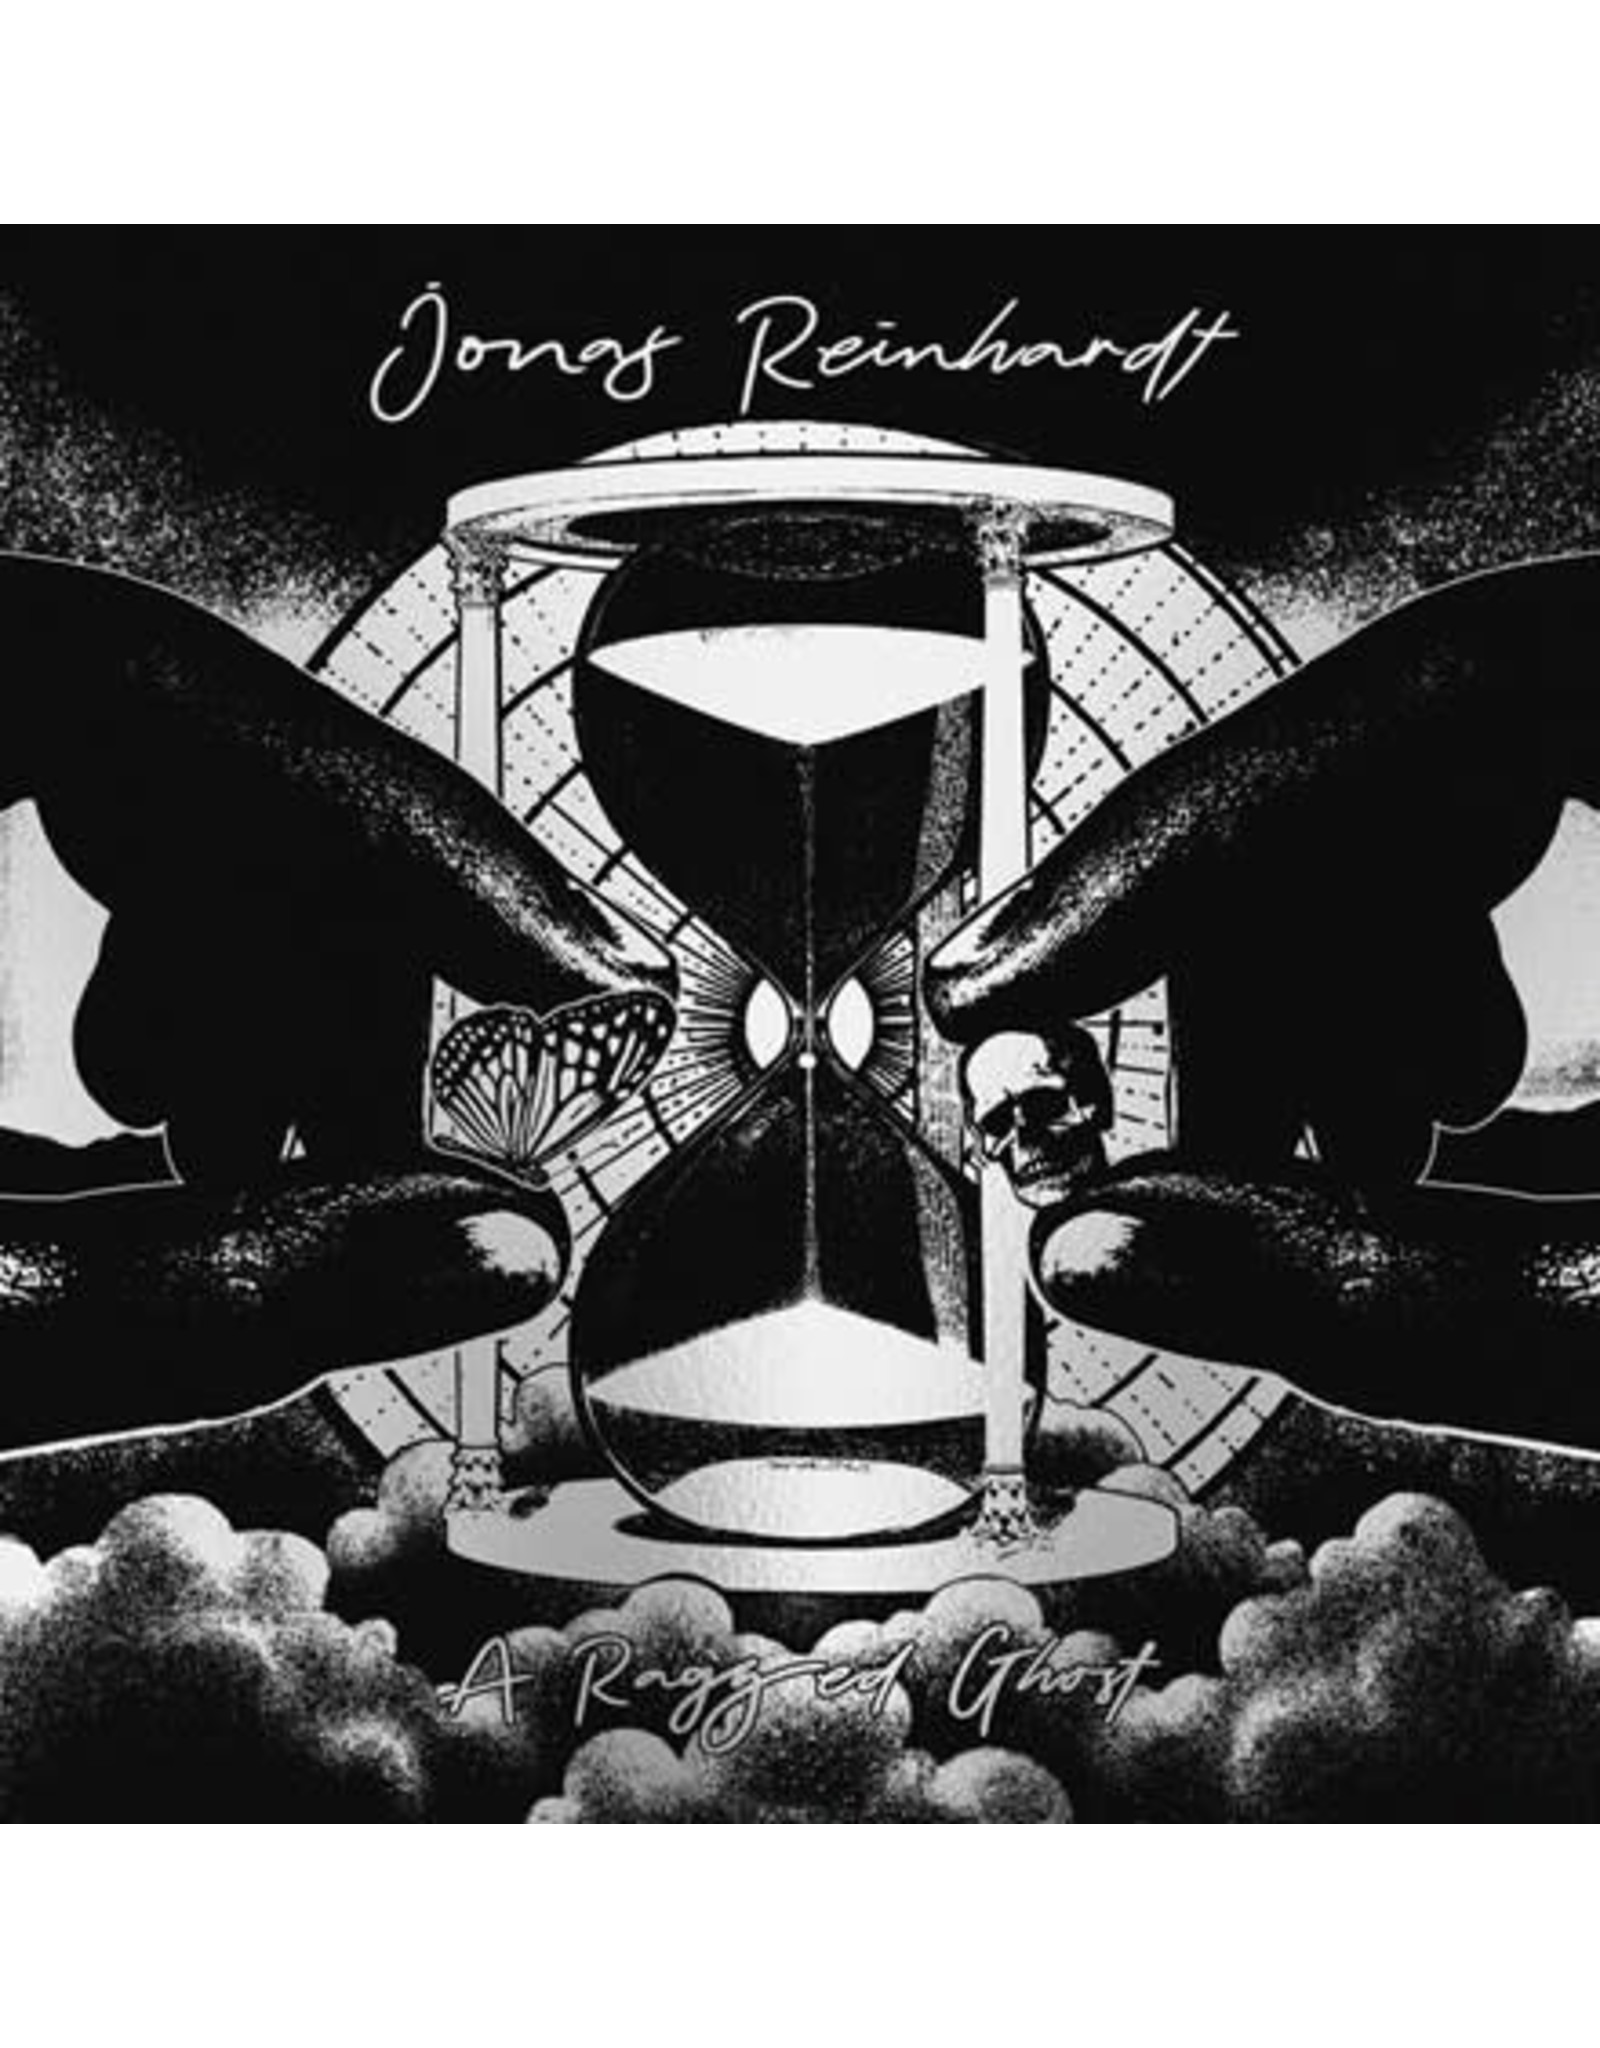 Trouble In Mind Reinhardt, Jonas: A Ragged Ghost (metallic silver) LP